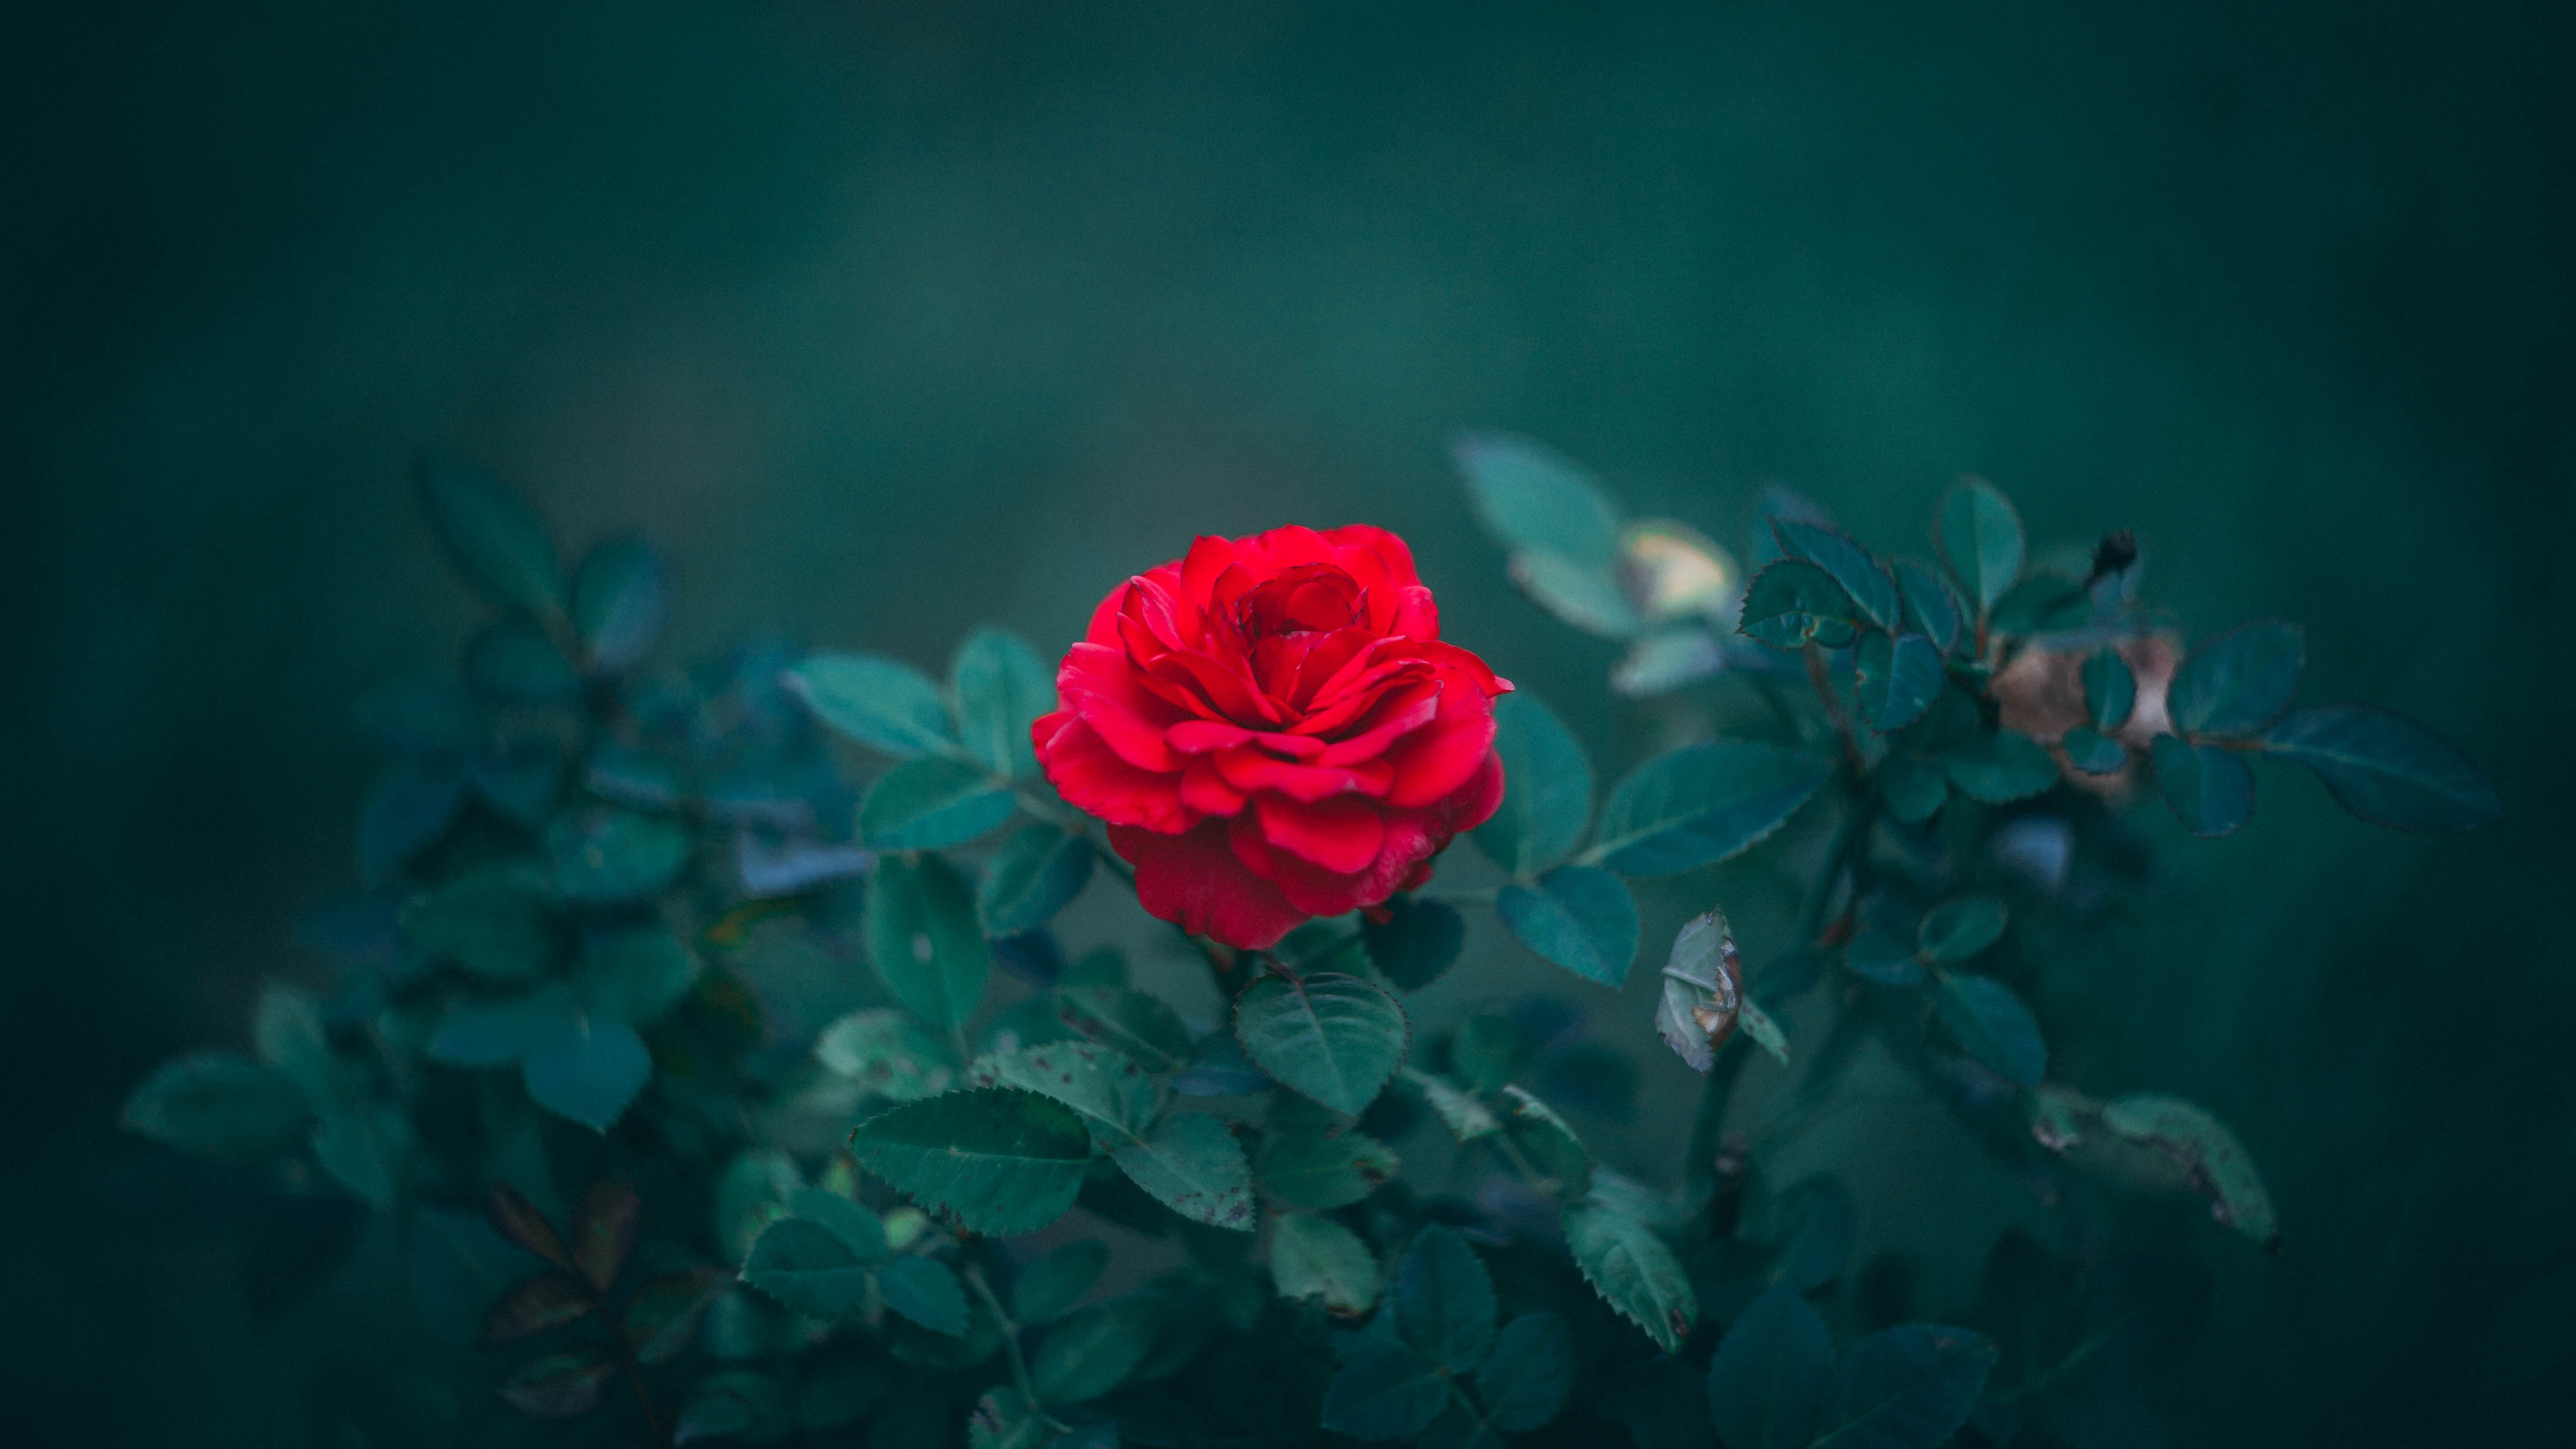 smooth, bud, leaves, rose flower, red, flowers, bush, rose, blur iphone wallpaper